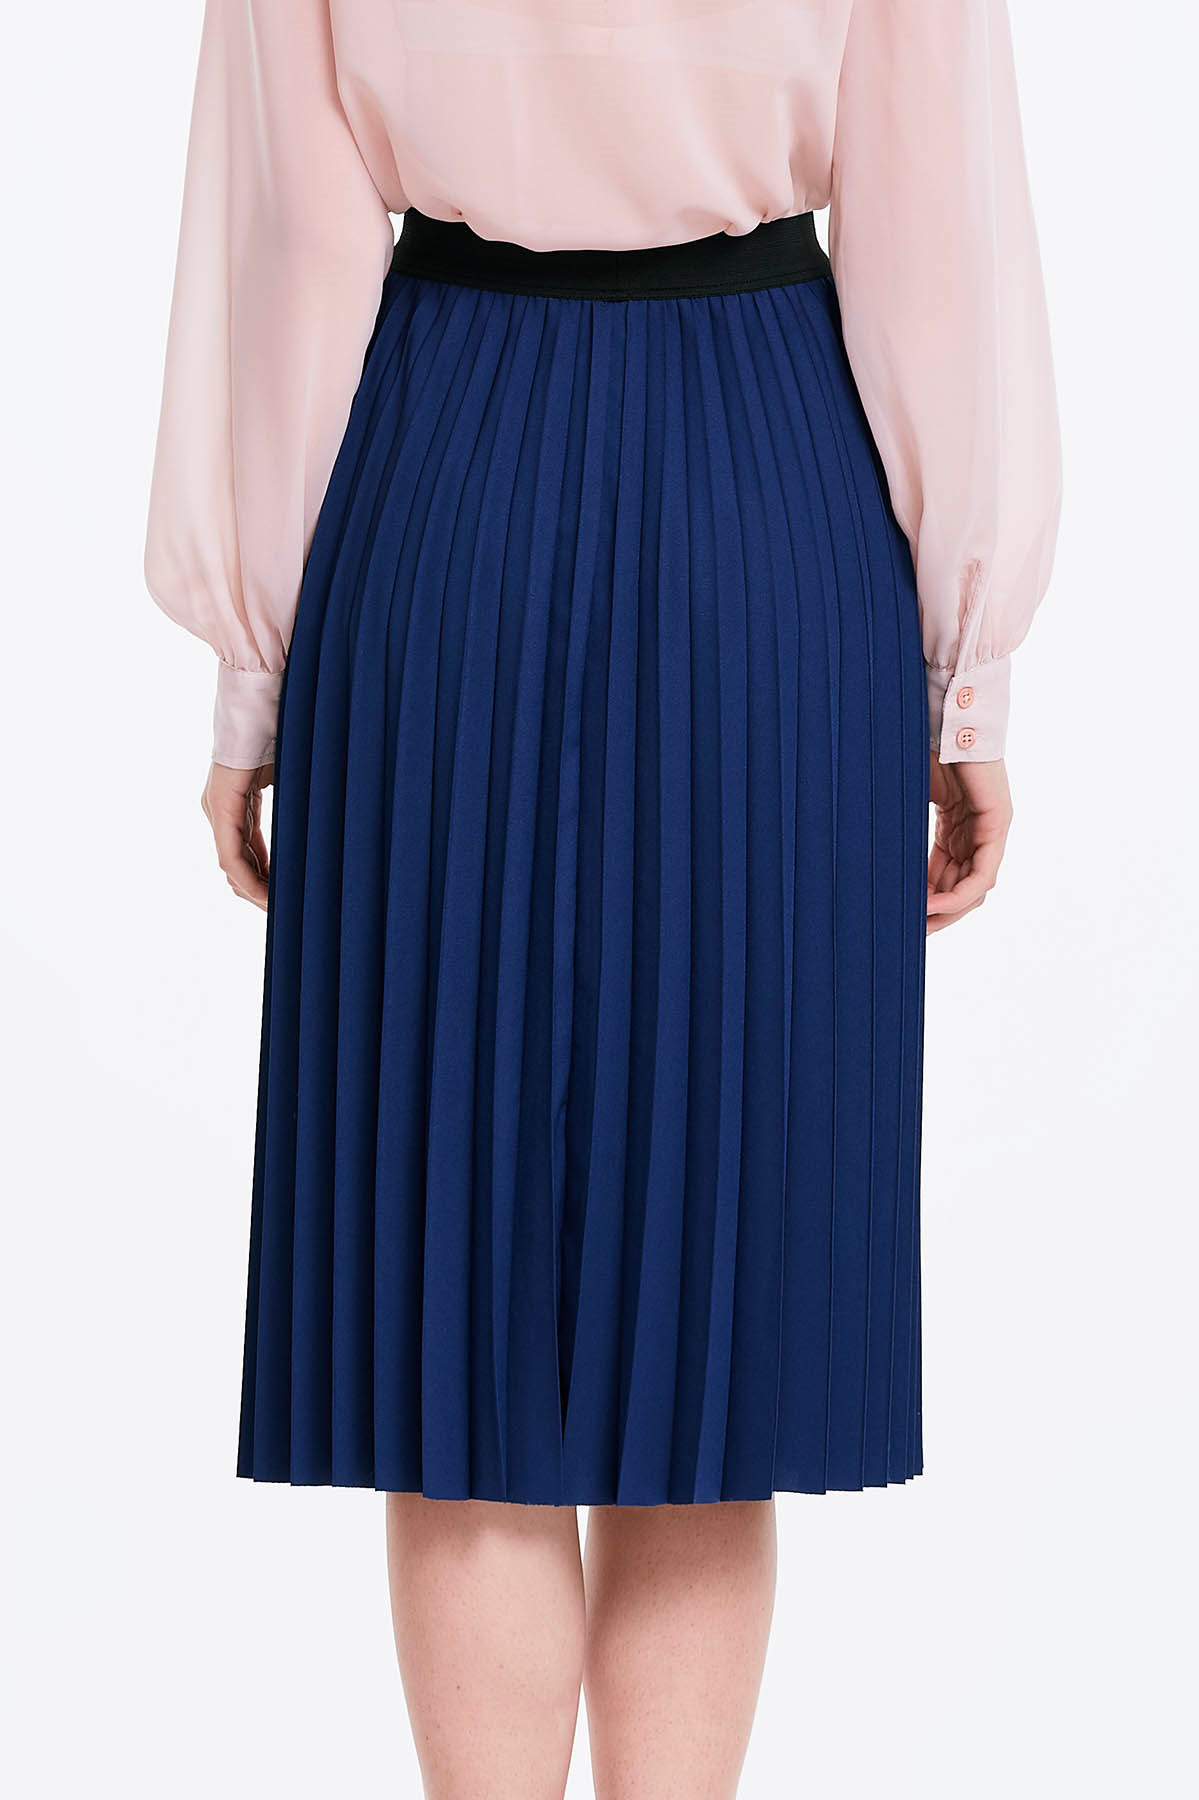 Below the knee pleated blue skirt , photo 1